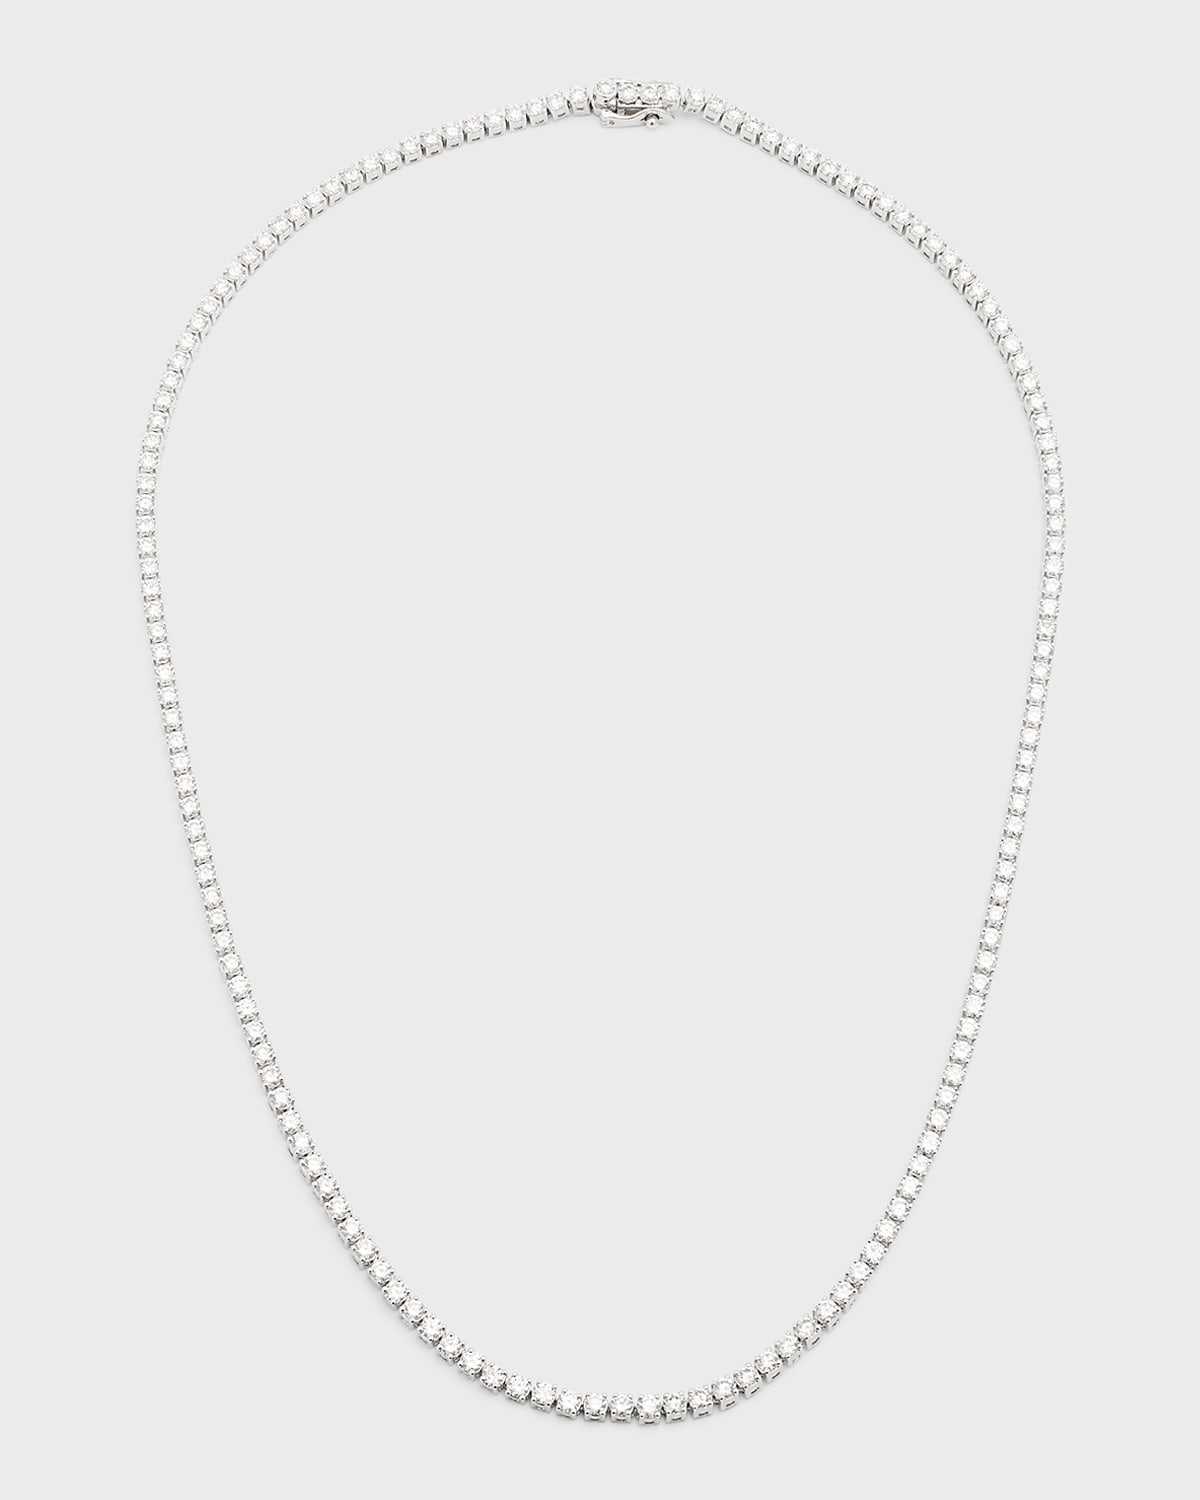 18K White Gold Round Diamond Line Necklace, 18"L, 10.0tcw